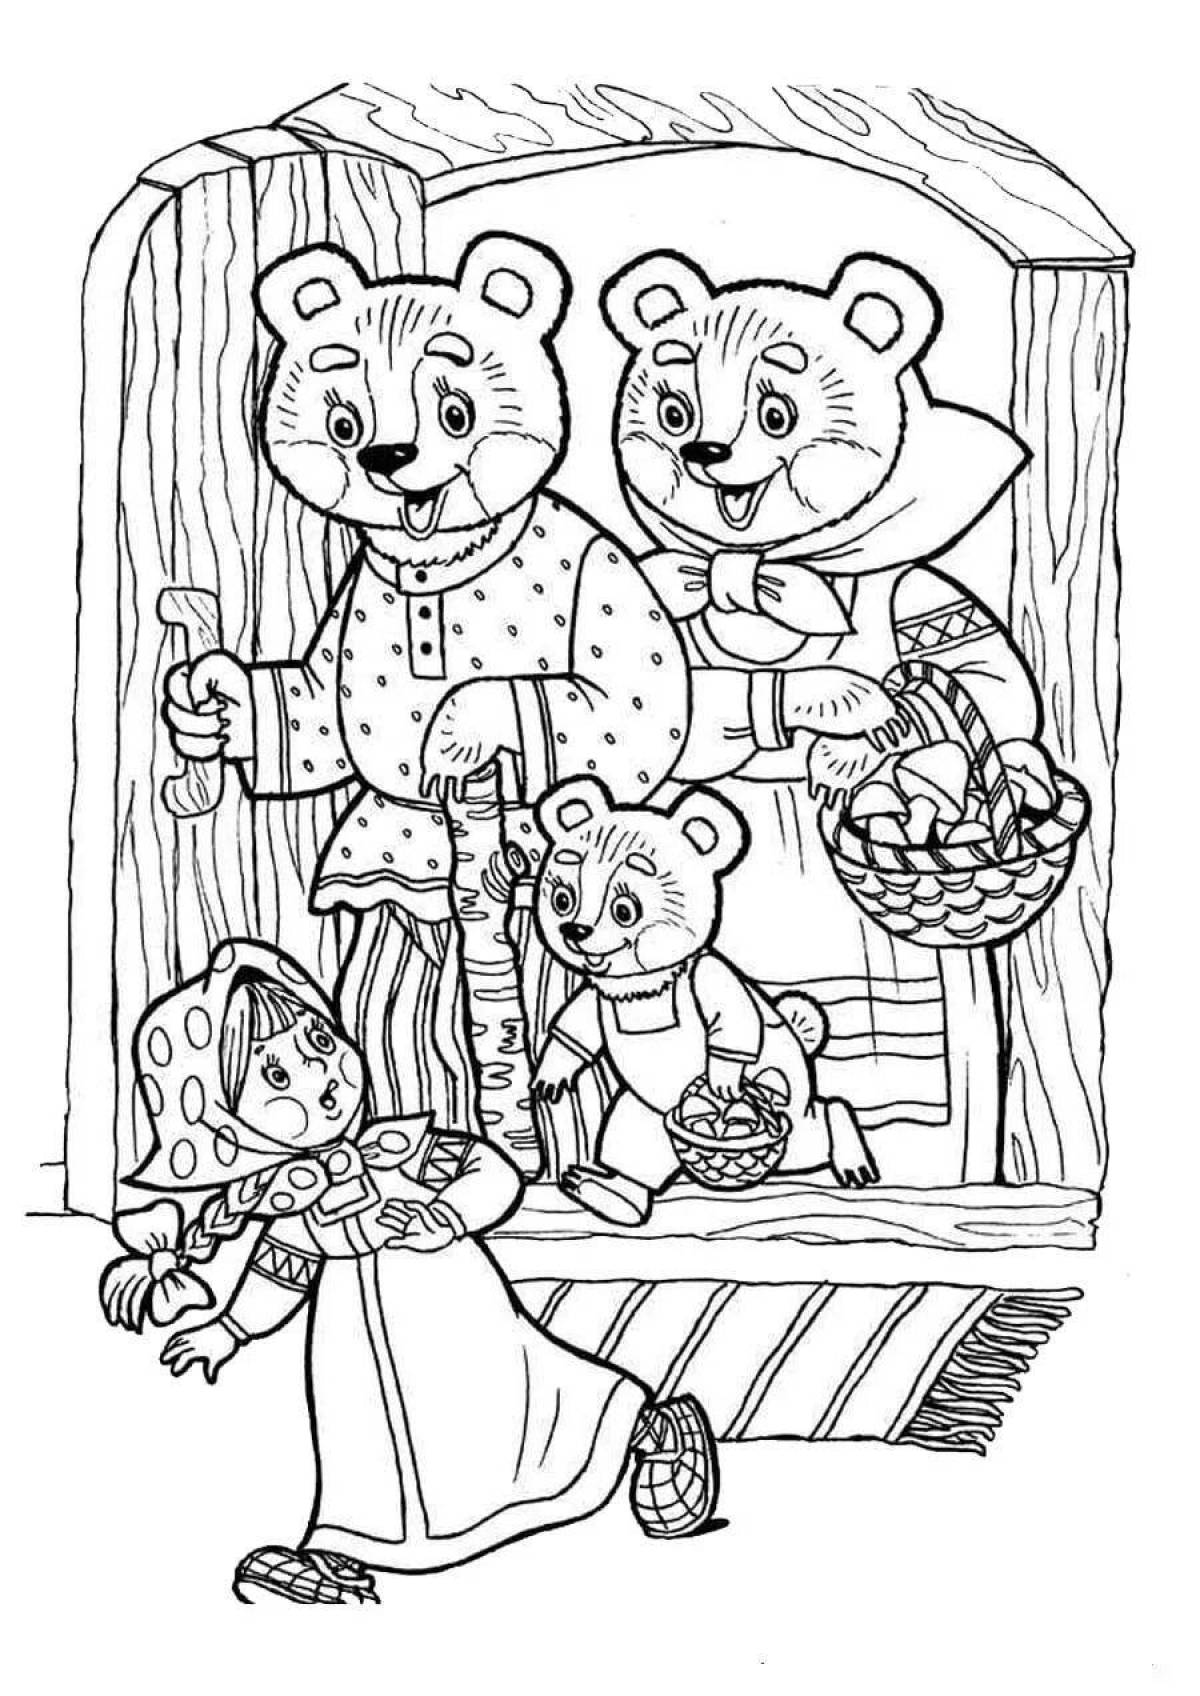 Three bears adorable coloring book